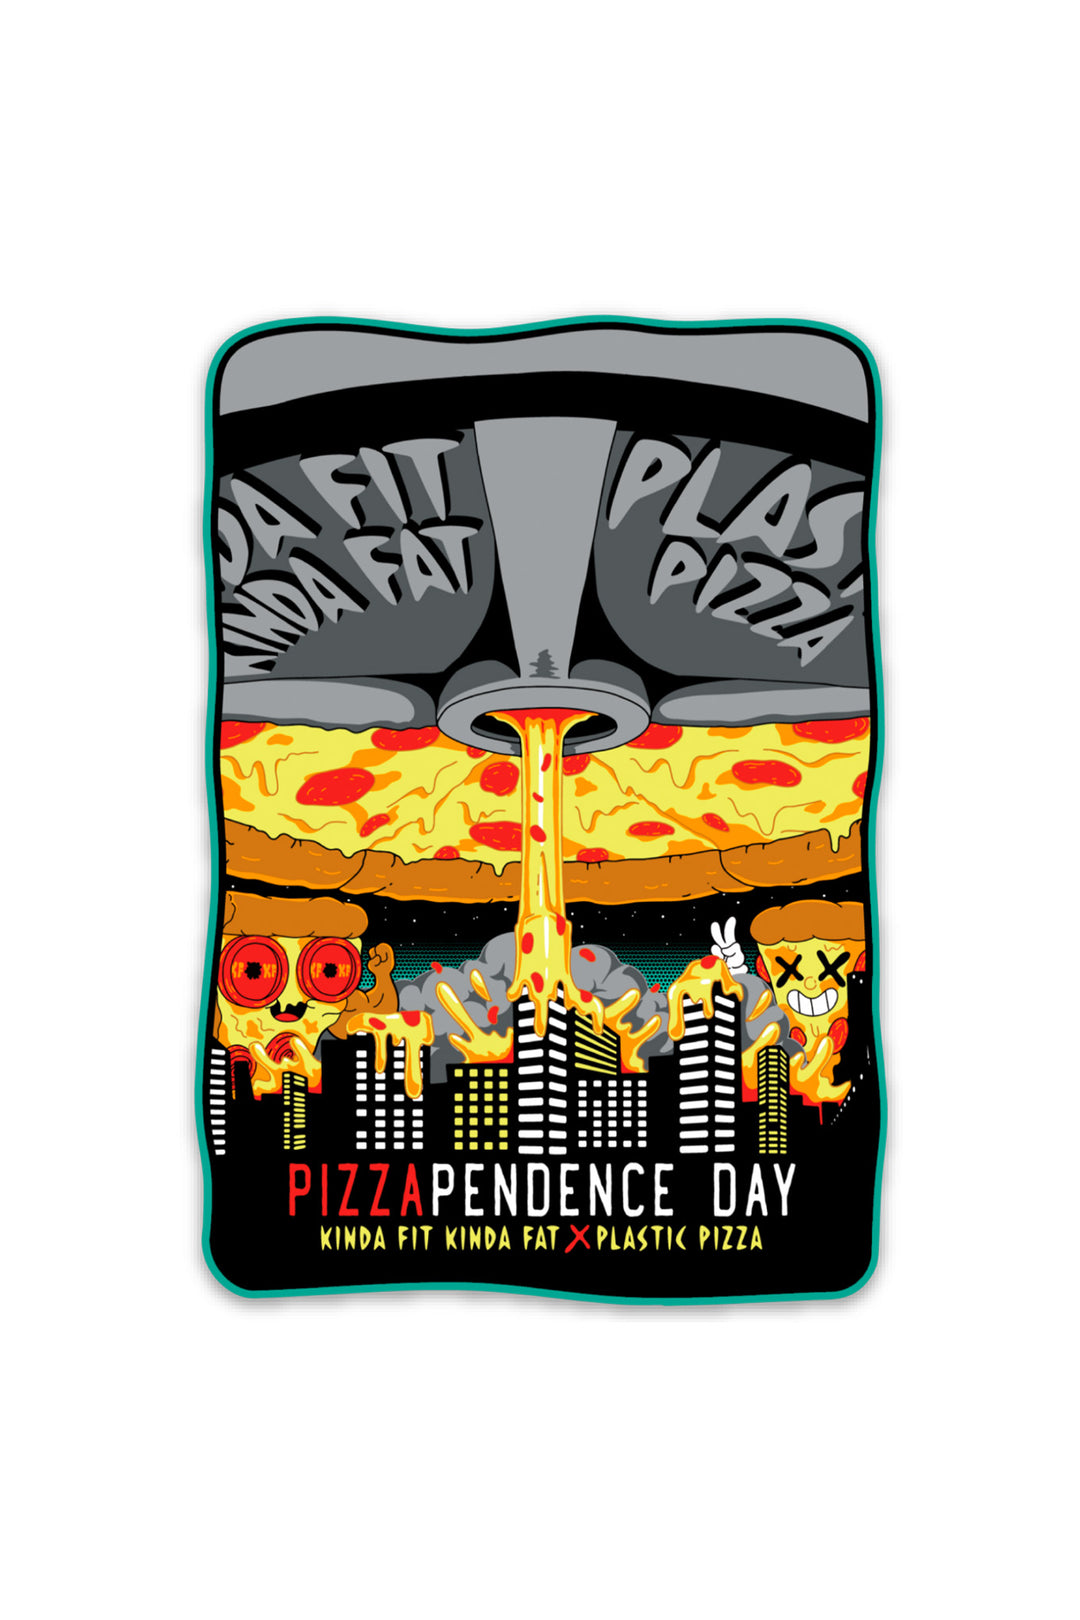 KFKF x Plastic Pizza Pizzapendence Day Sticker